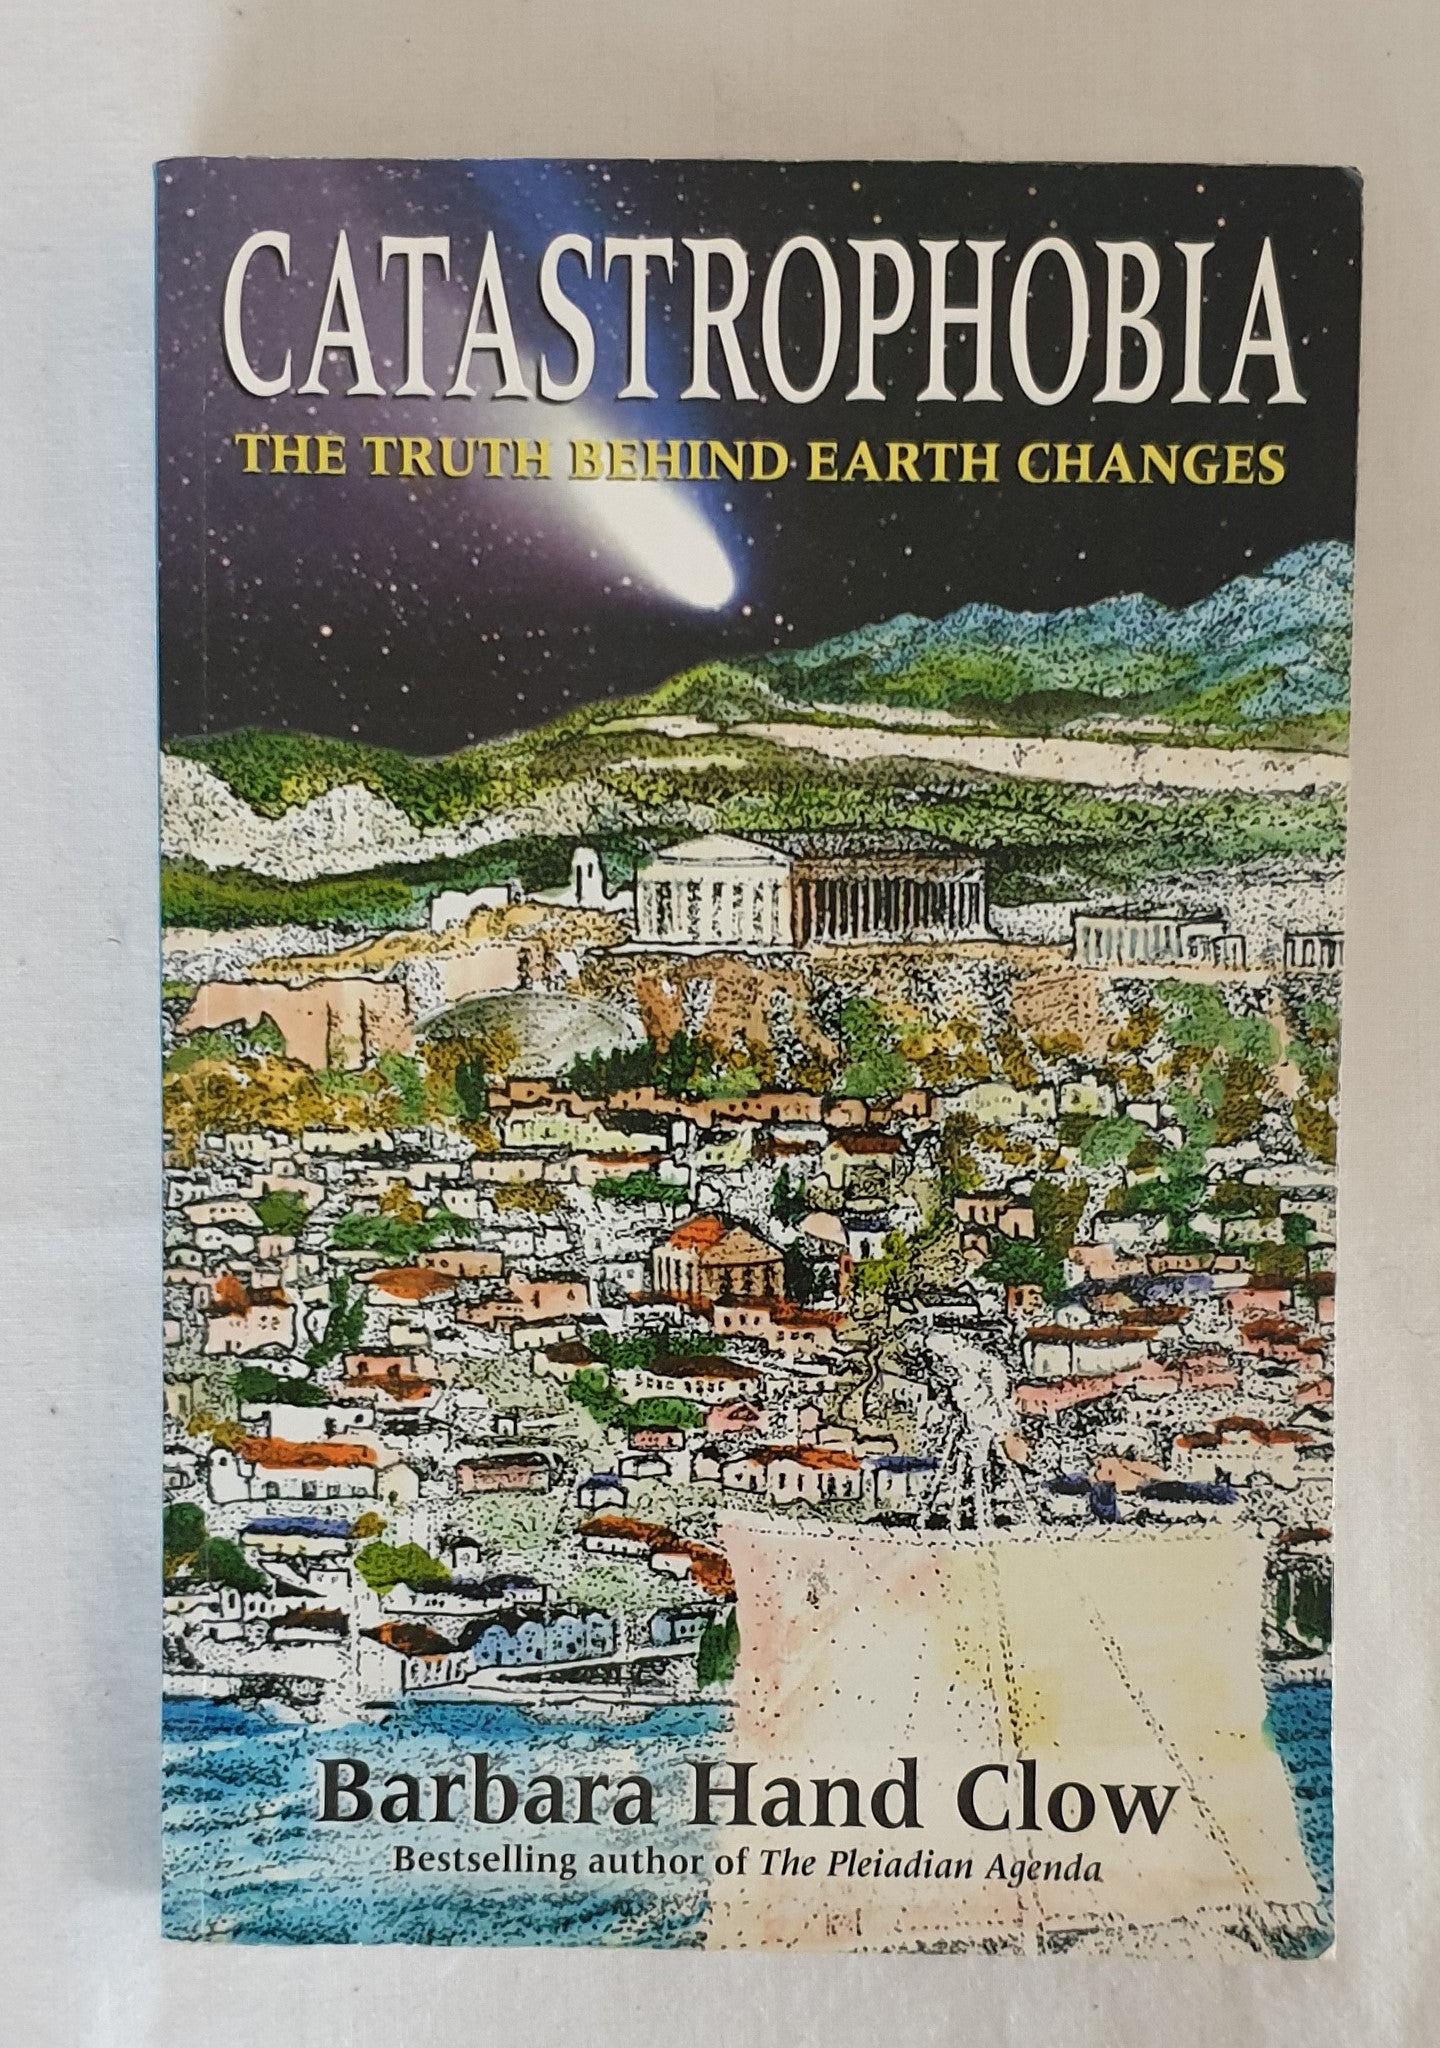 Catastrophobia by Barbara Hand Clow